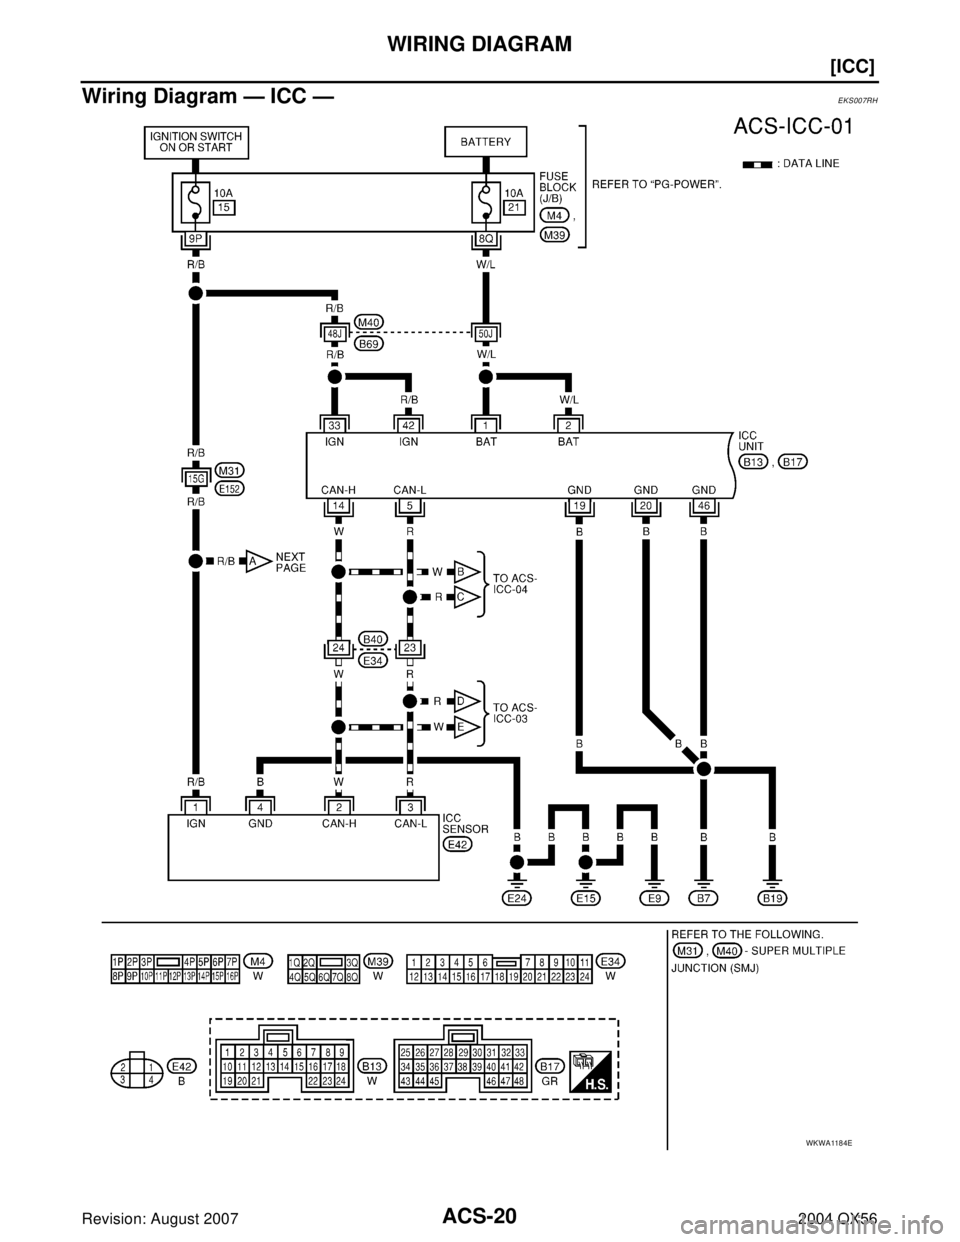 INFINITI QX56 2004  Factory Service Manual ACS-20
[ICC]
WIRING DIAGRAM
Revision: August 20072004 QX56
Wiring Diagram — ICC —EKS007RH
WKWA1184E 